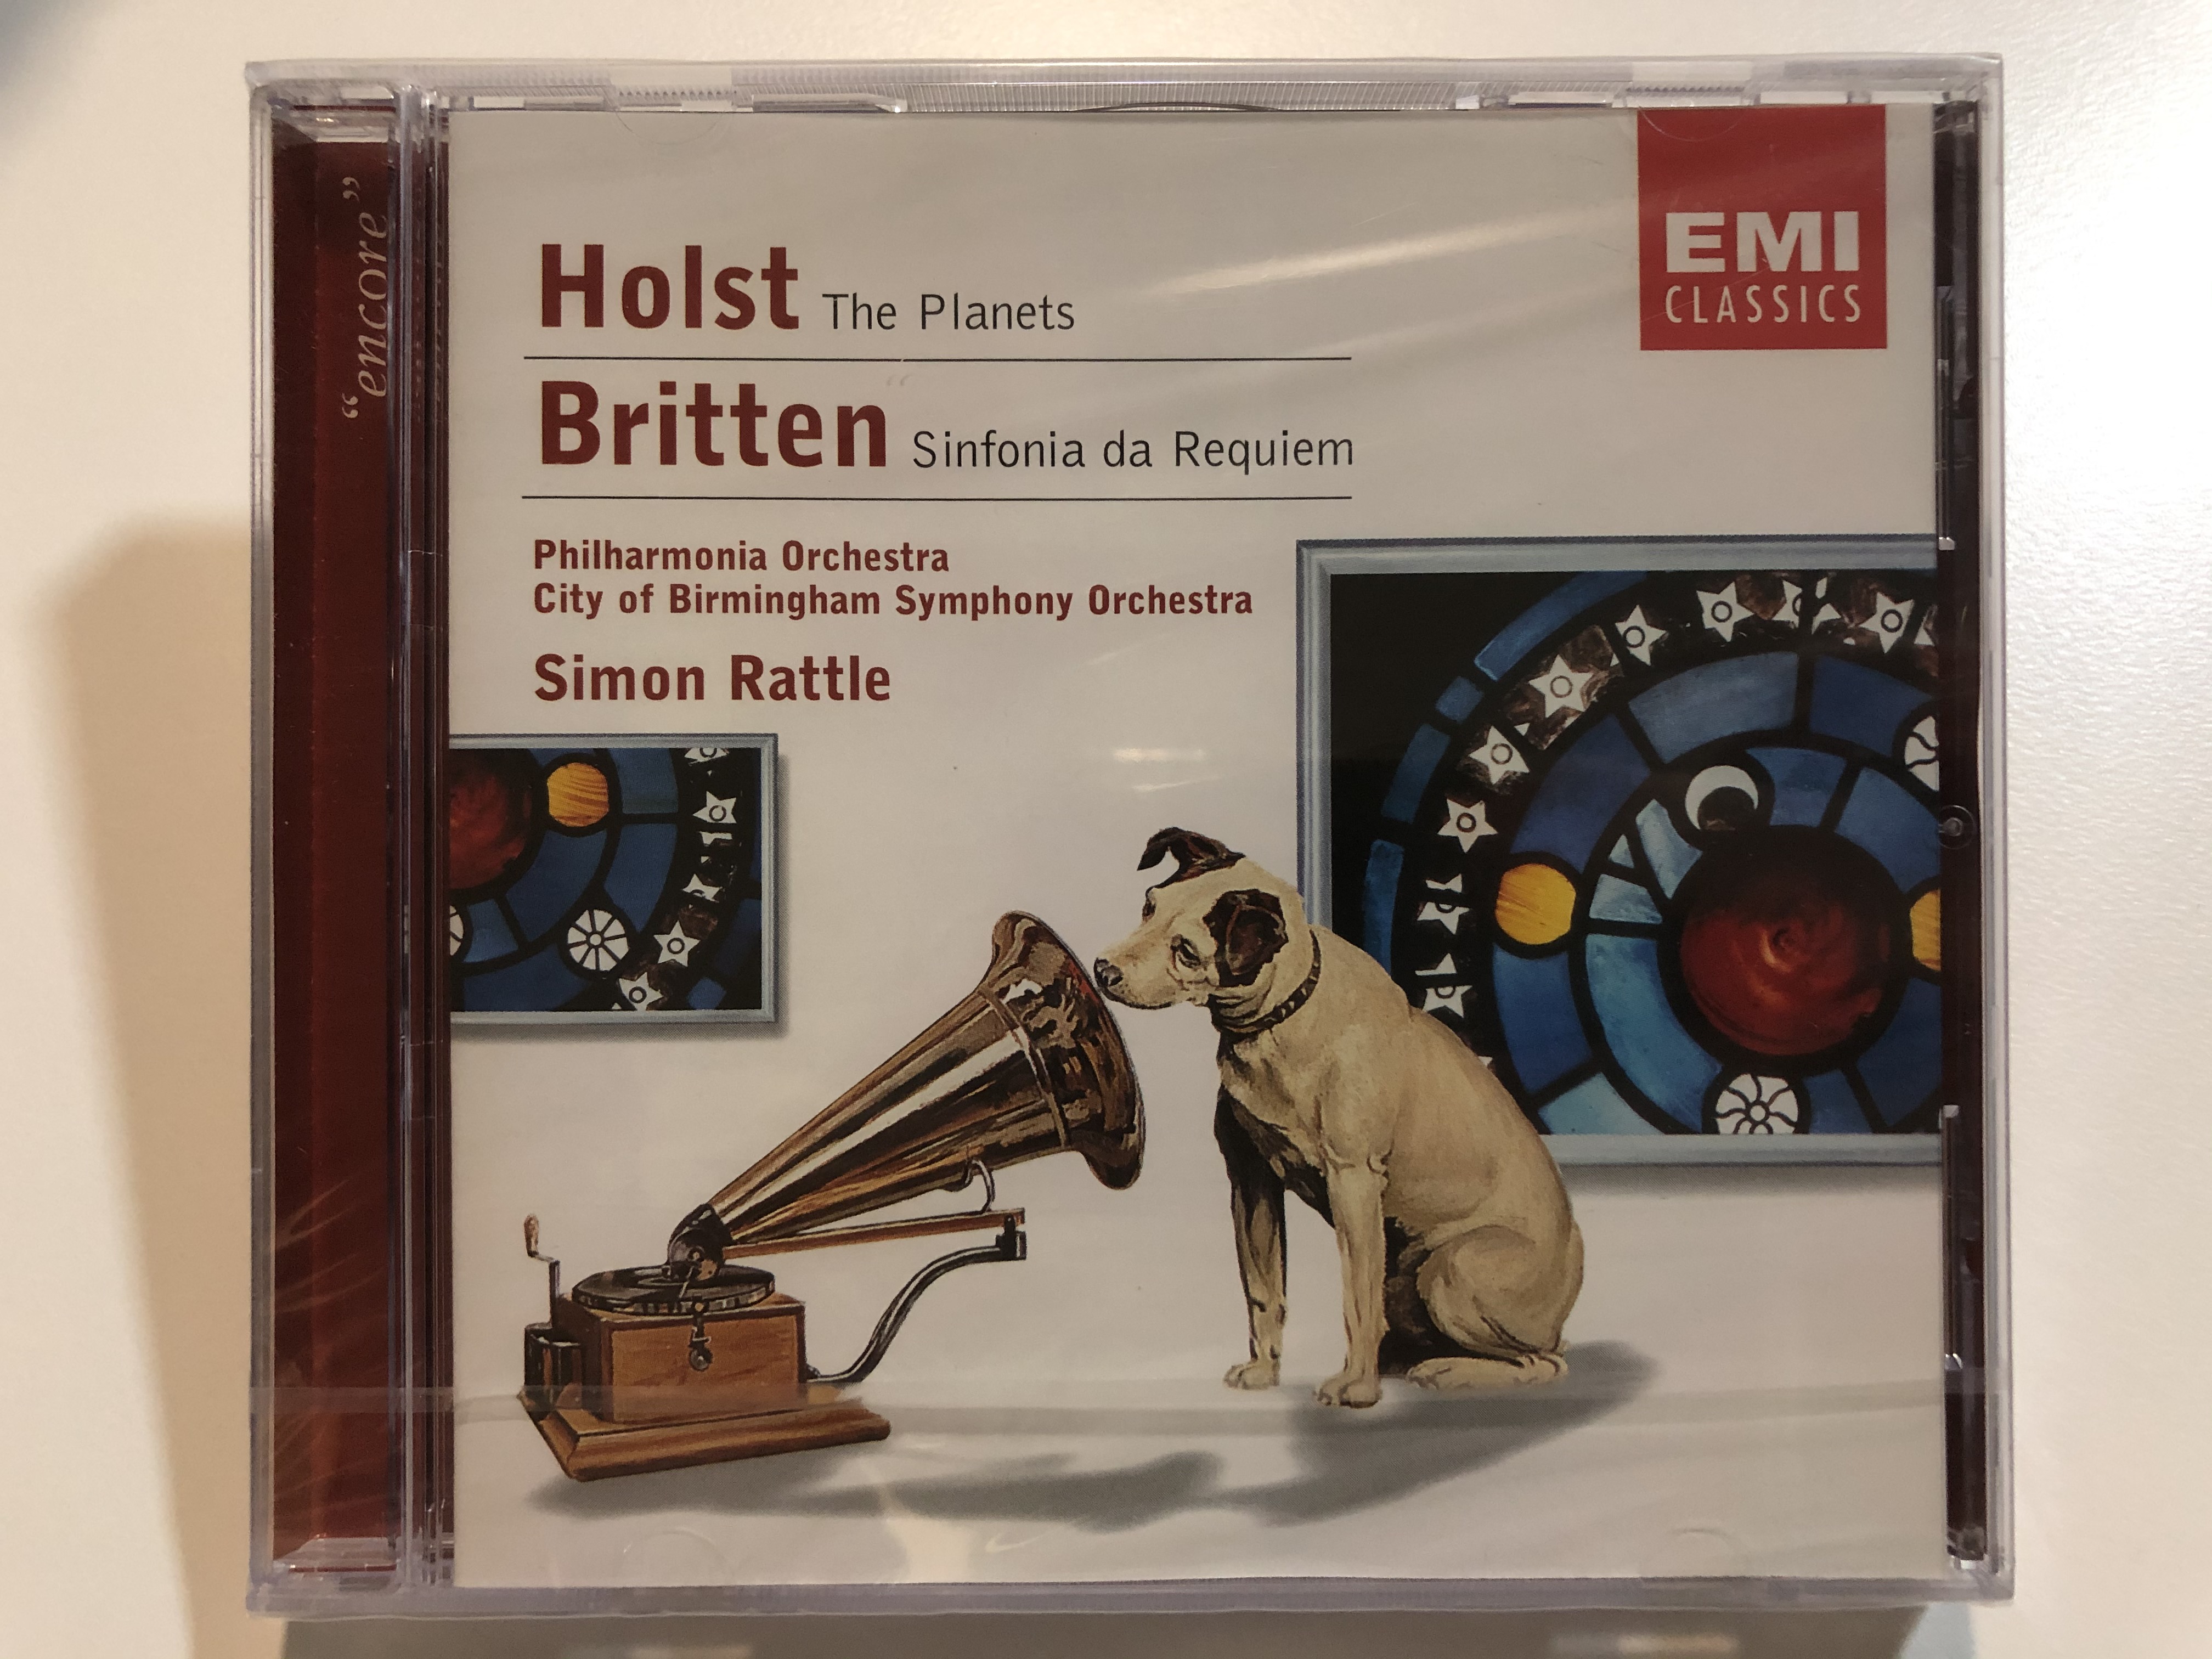 holst-the-planets-britten-sinfonia-da-requiem-philharmonia-orchestra-city-of-birmingham-symphony-orchestra-simon-rattle-emi-classics-audio-cd-2003-stereo-724357586726-1-.jpg